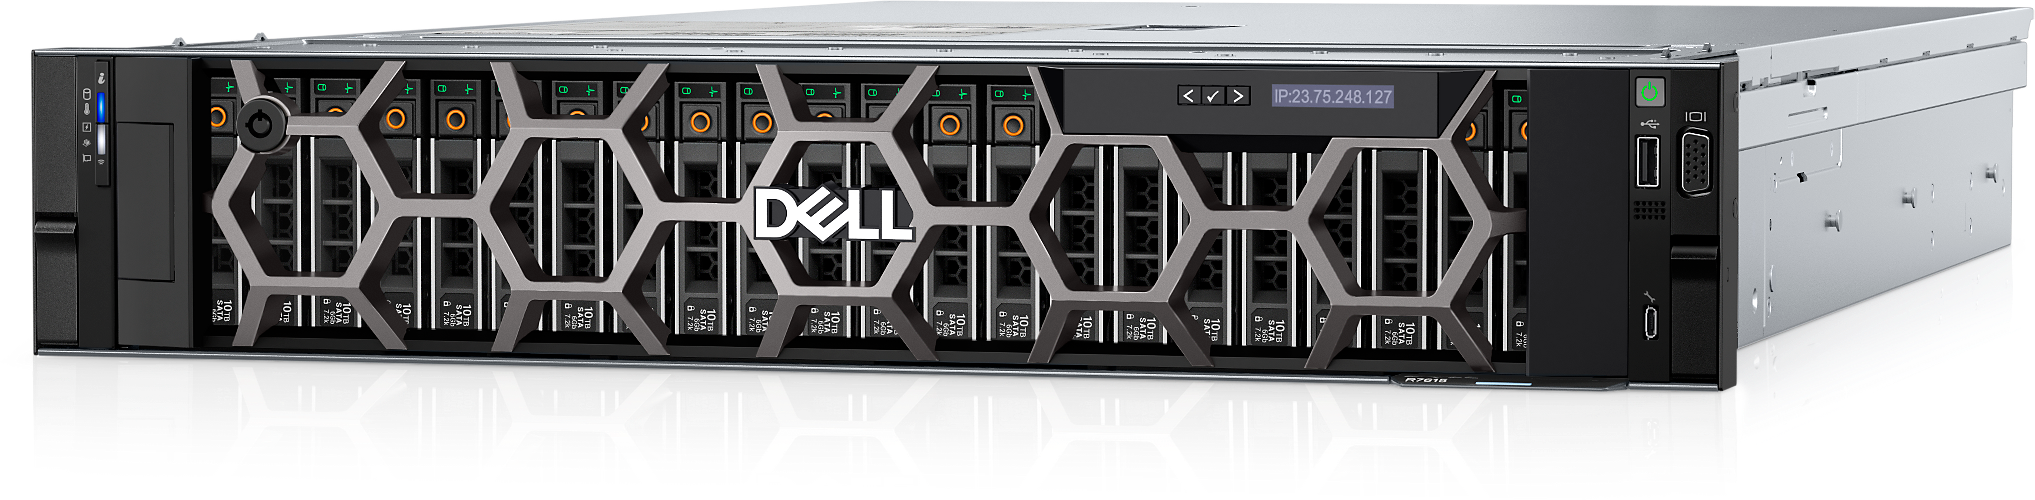 Server rack PowerEdge R7615